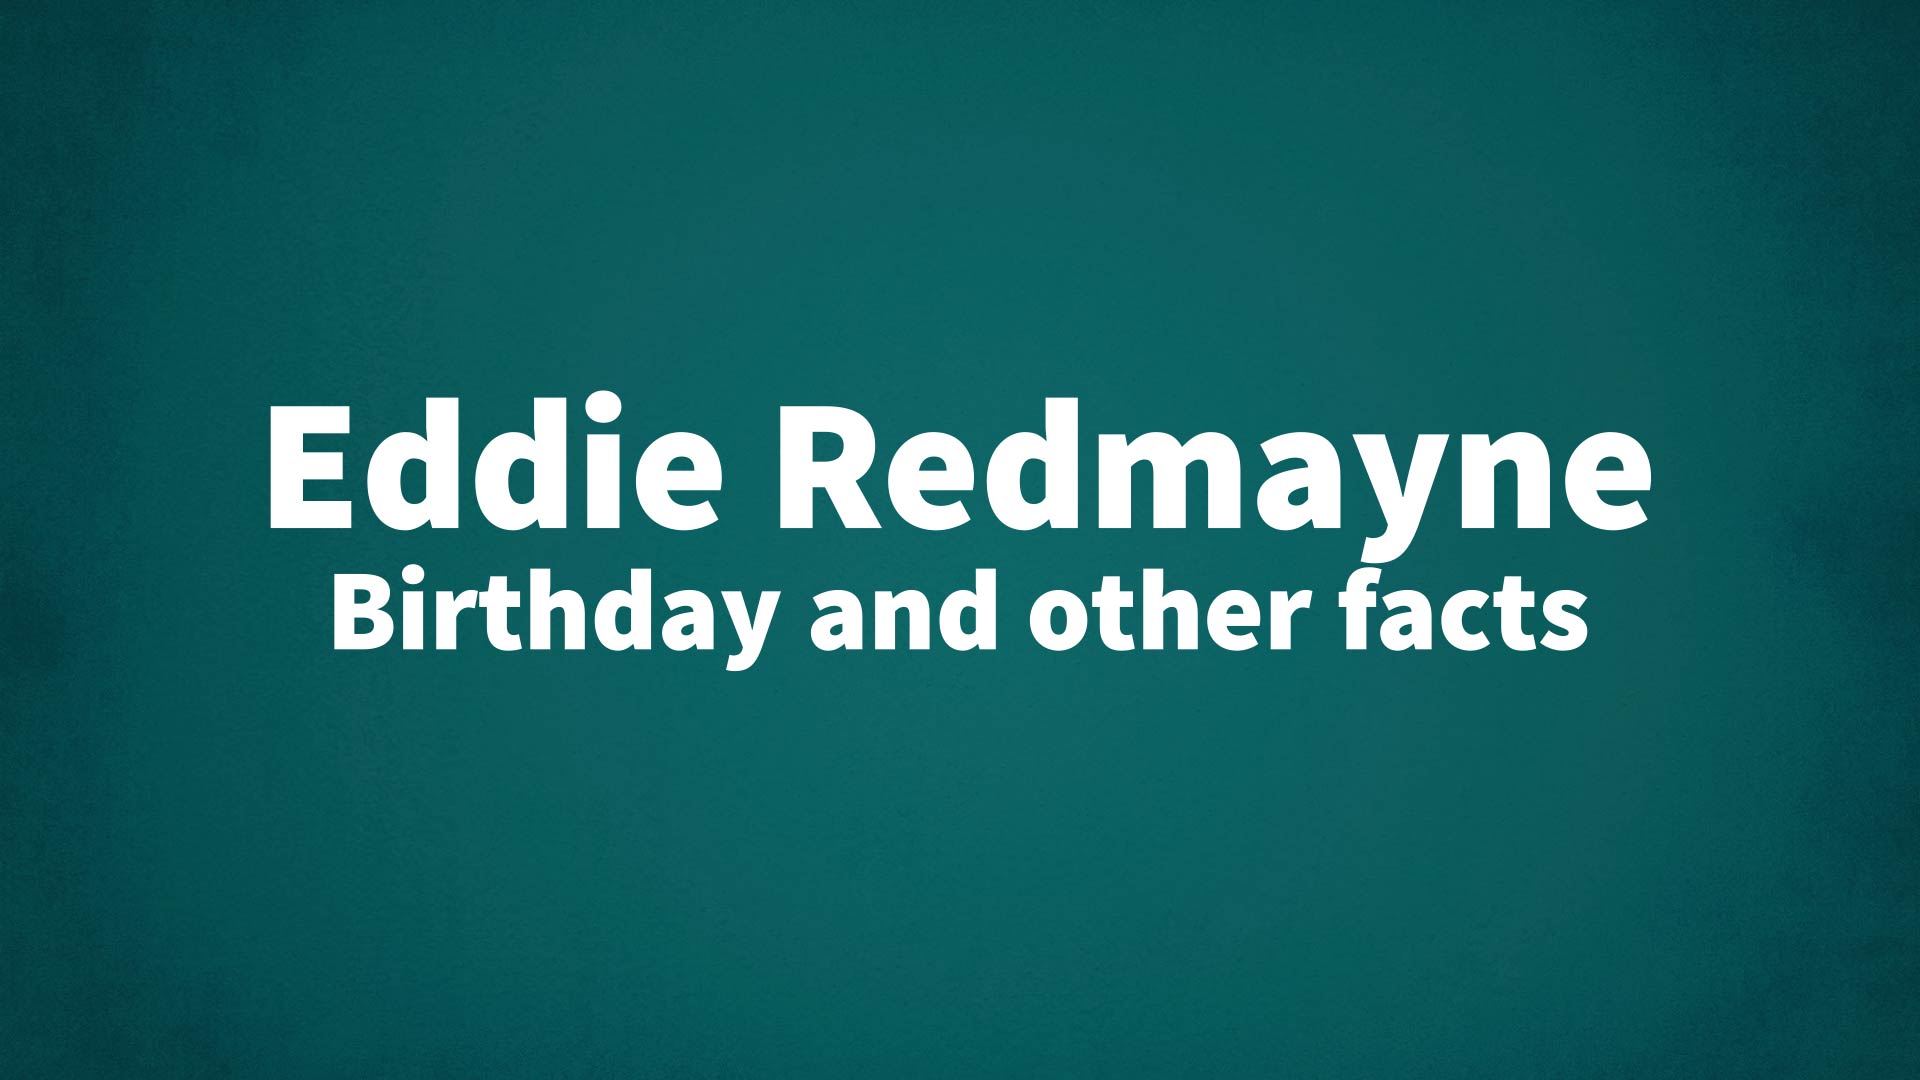 title image for Eddie Redmayne birthday